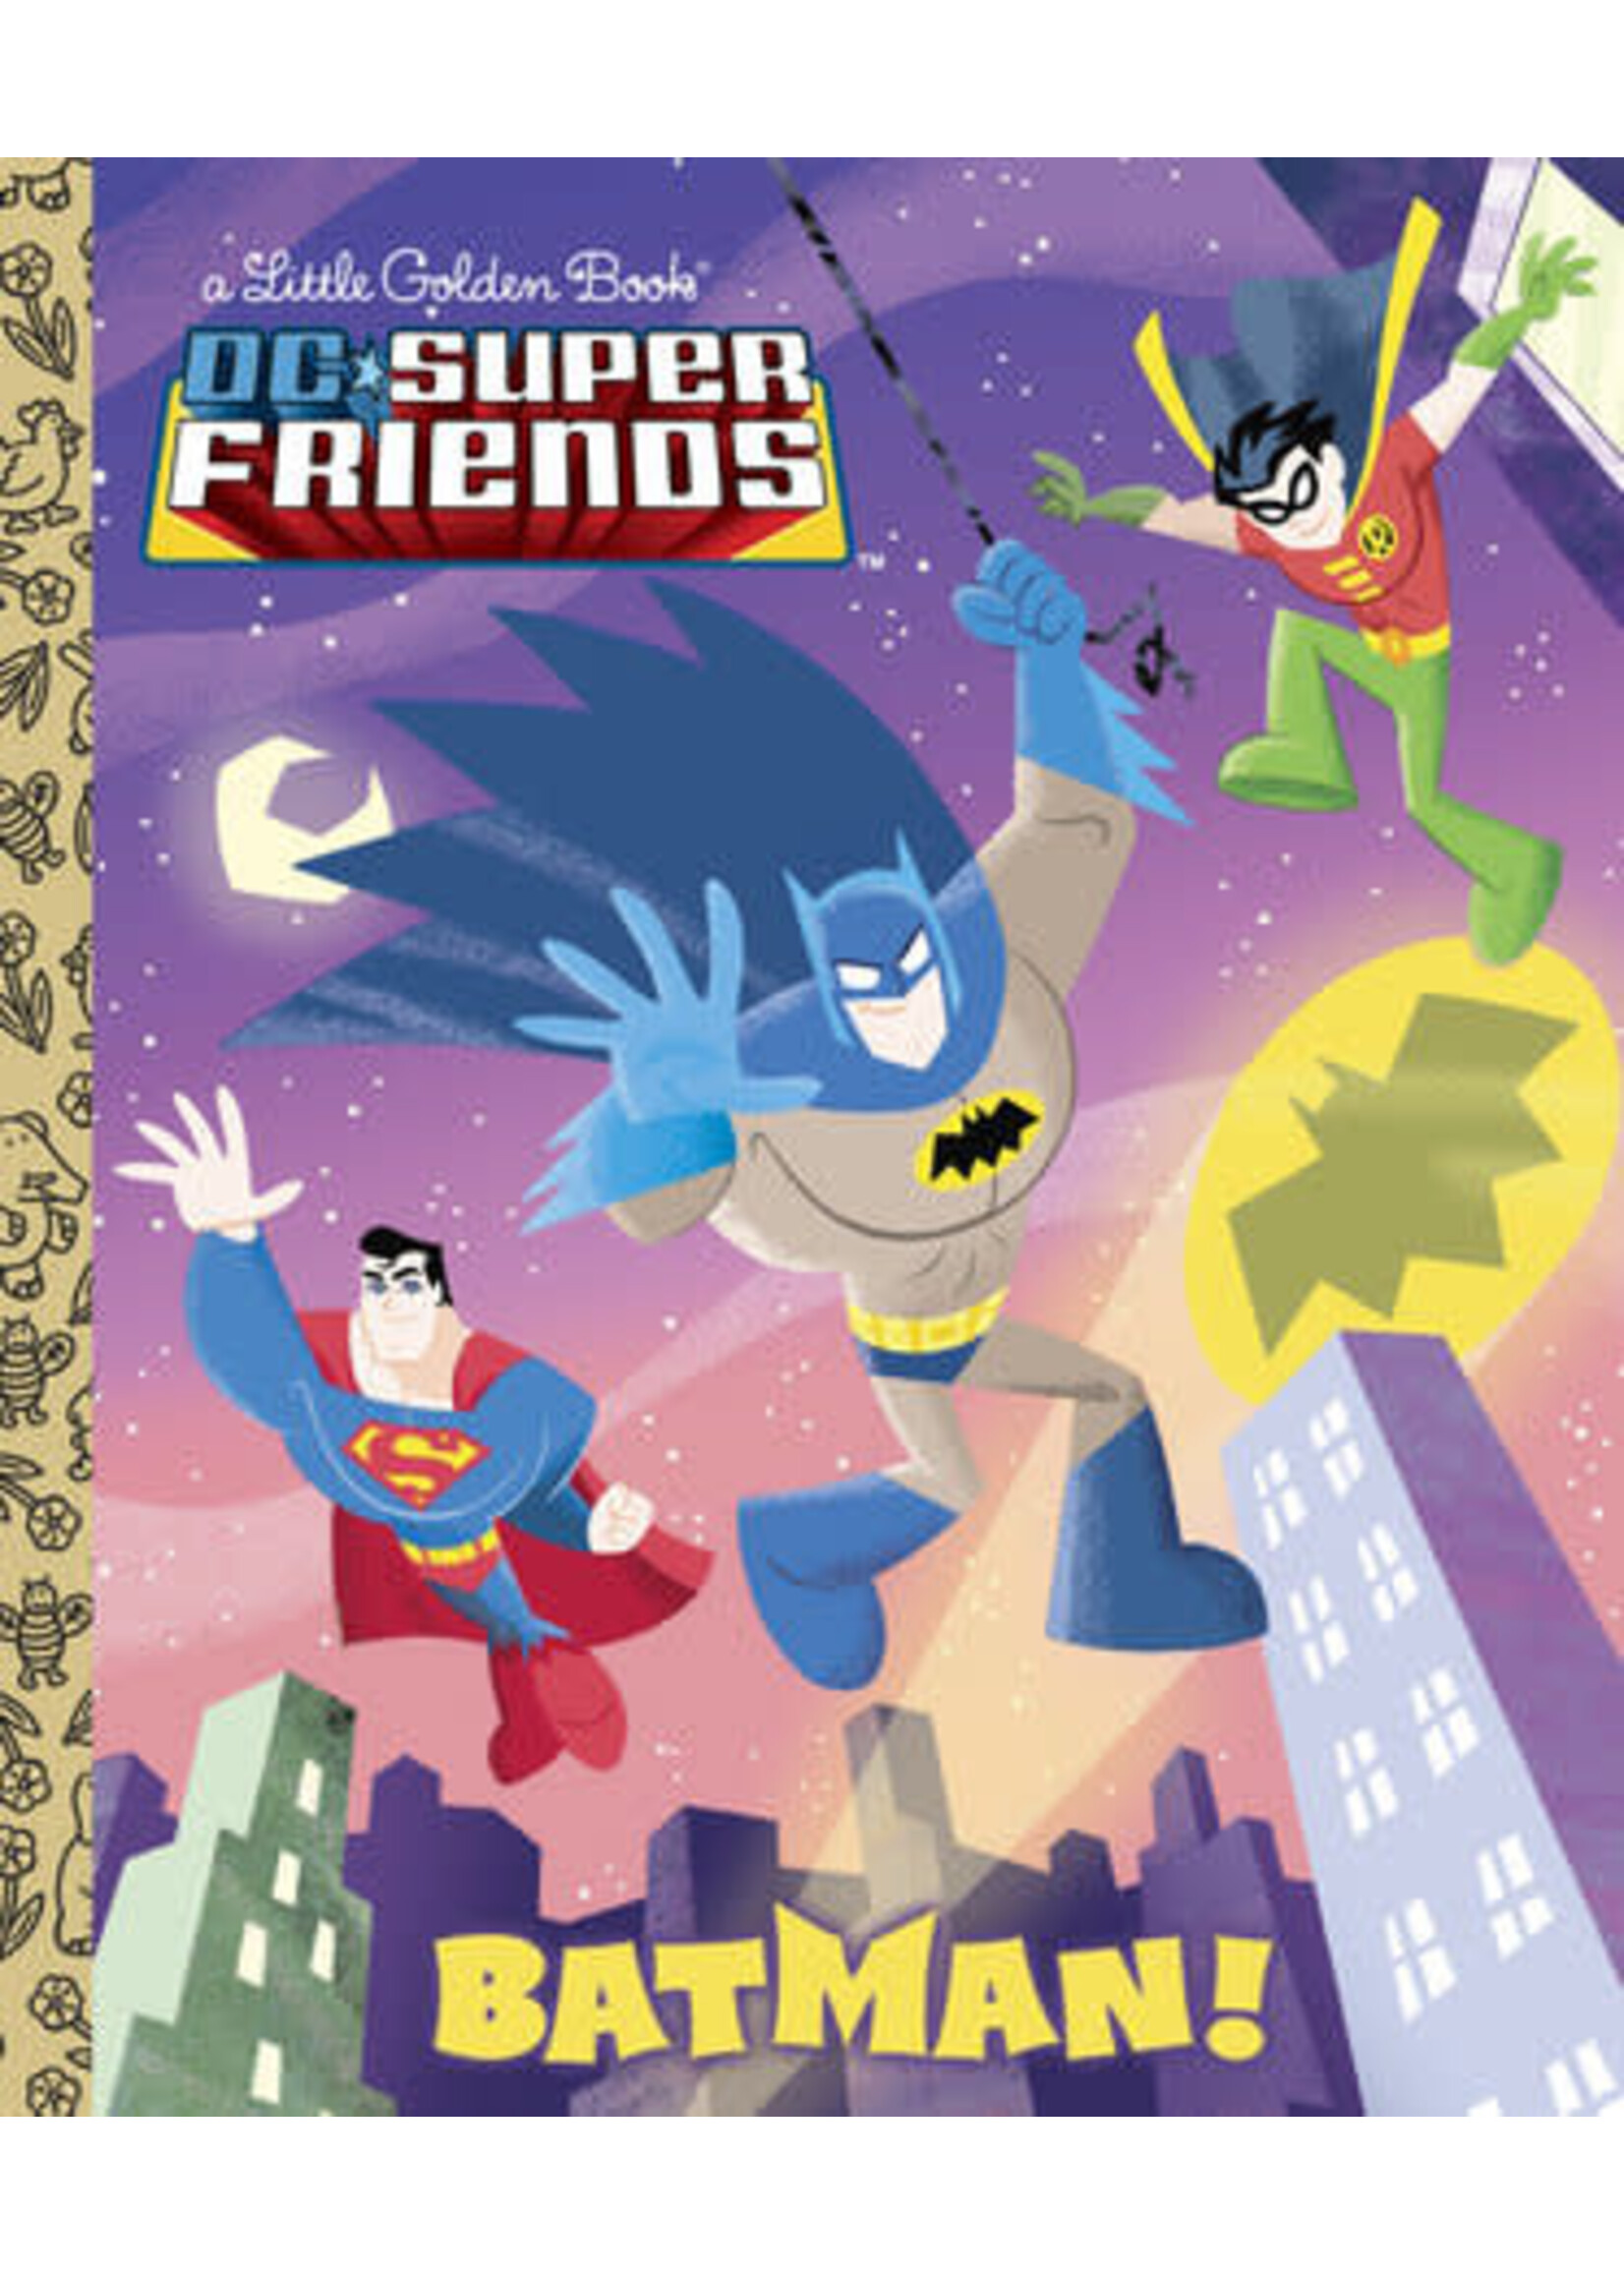 DC COMICS BATMAN! (DC SUPER FRIENDS) LITTLE GOLDEN BOOK